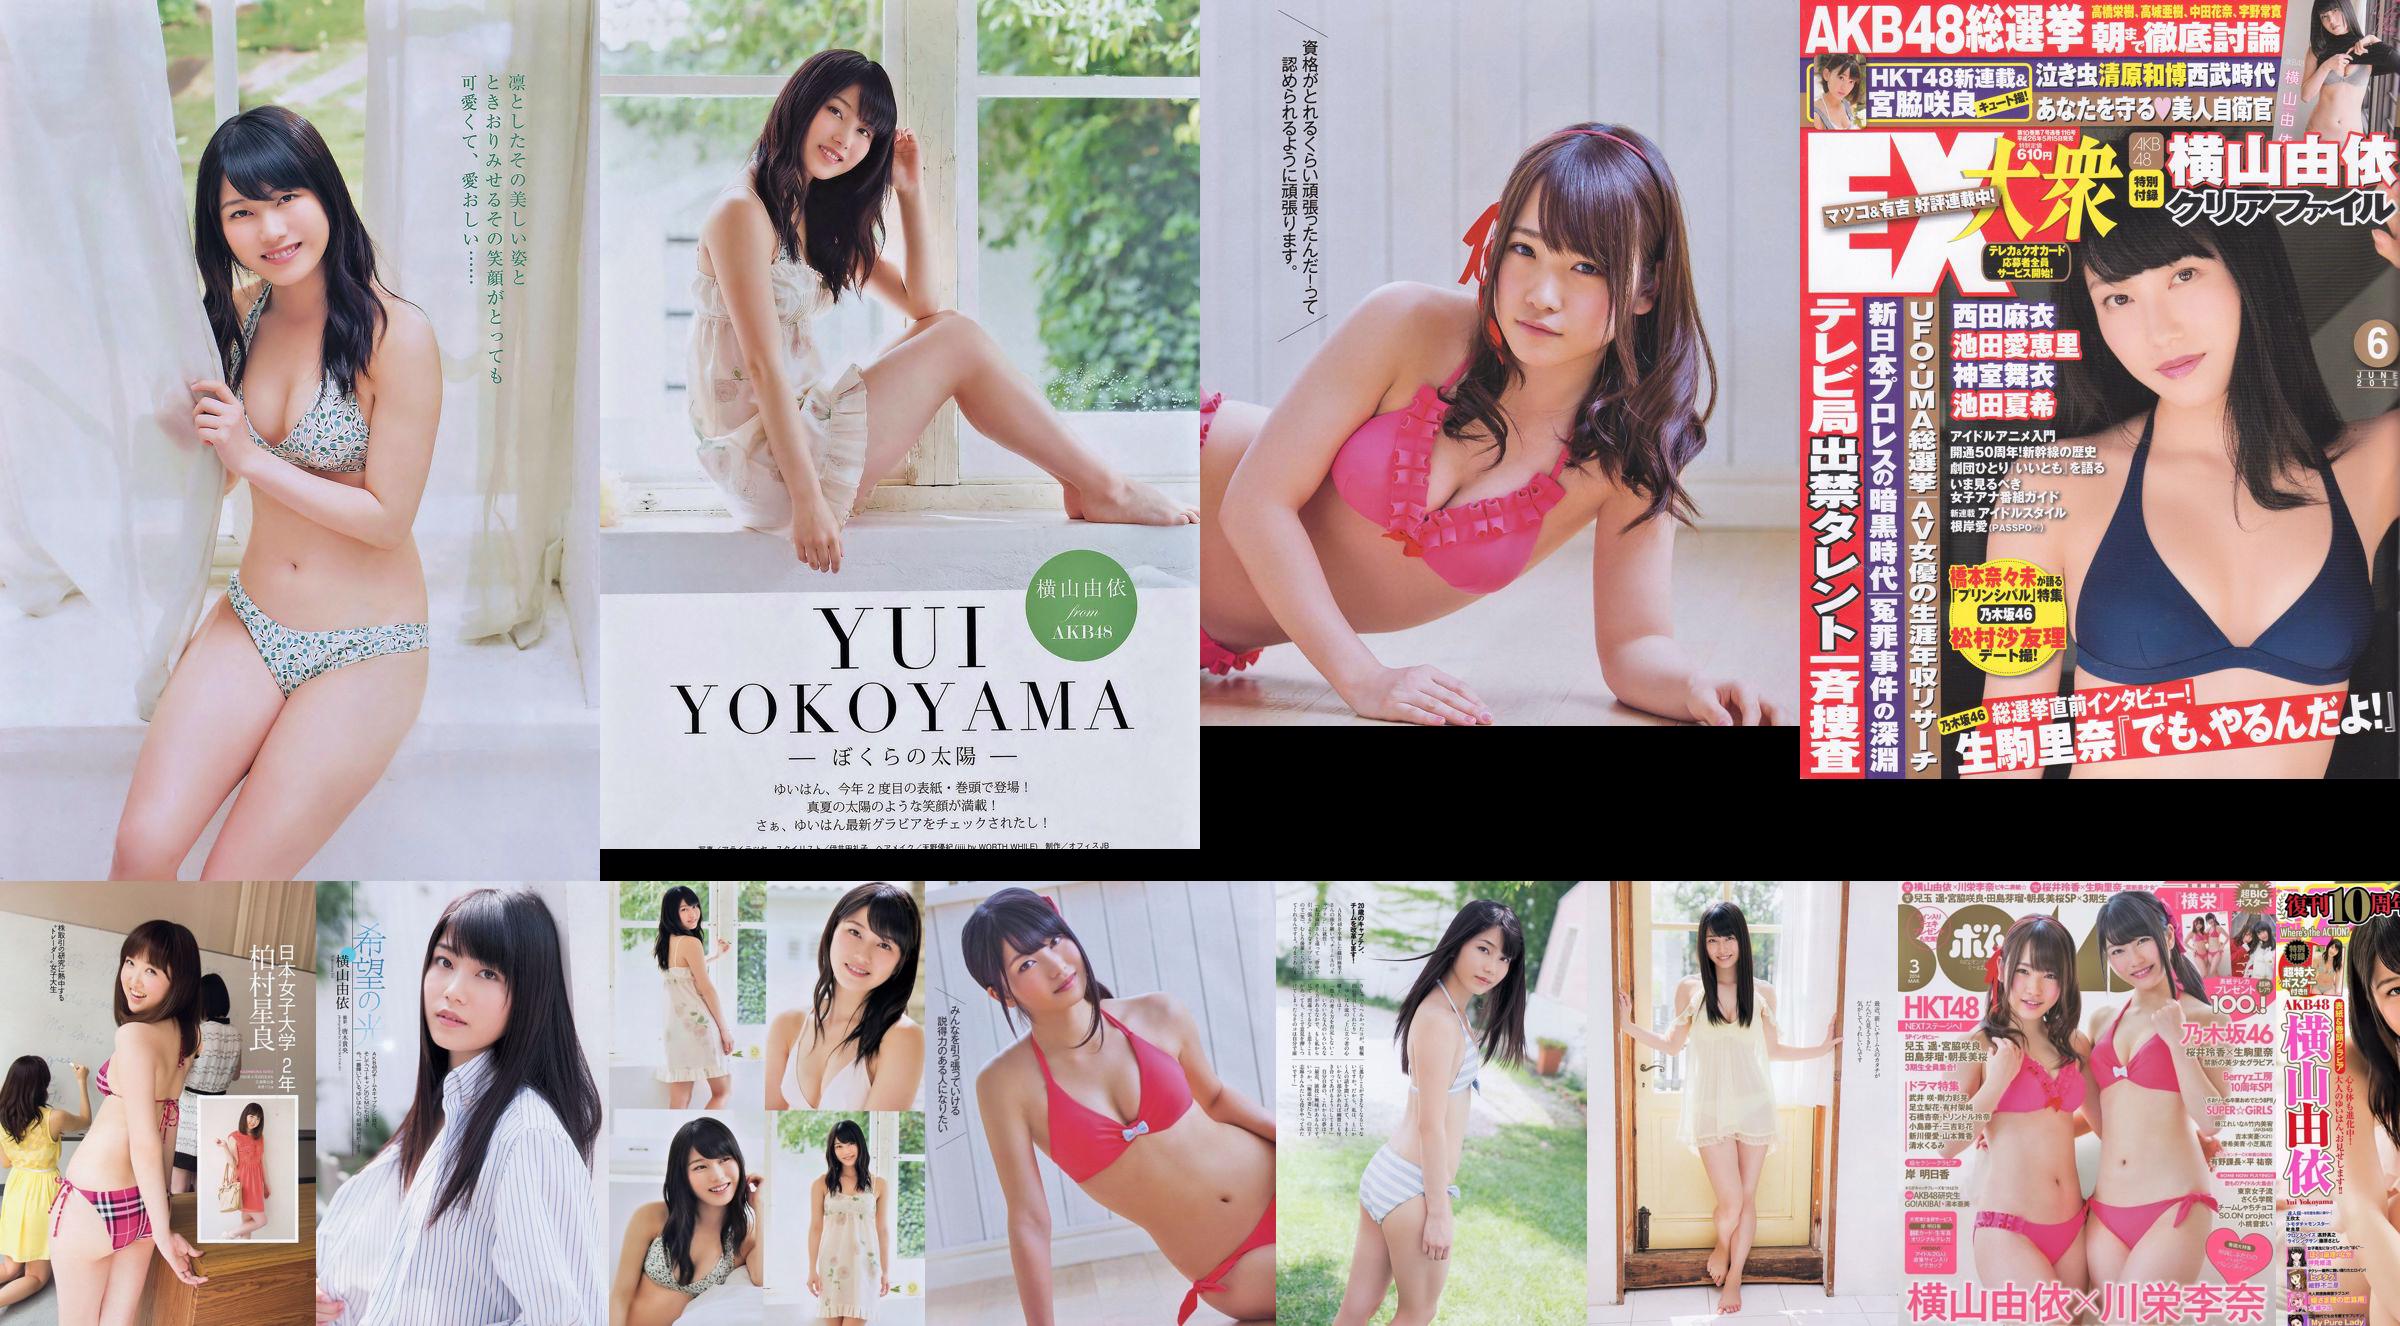 [Majalah Bom] 2014 No.03 Yui Yokoyama Rina Kawaei Foto No.0e9ec5 Halaman 1